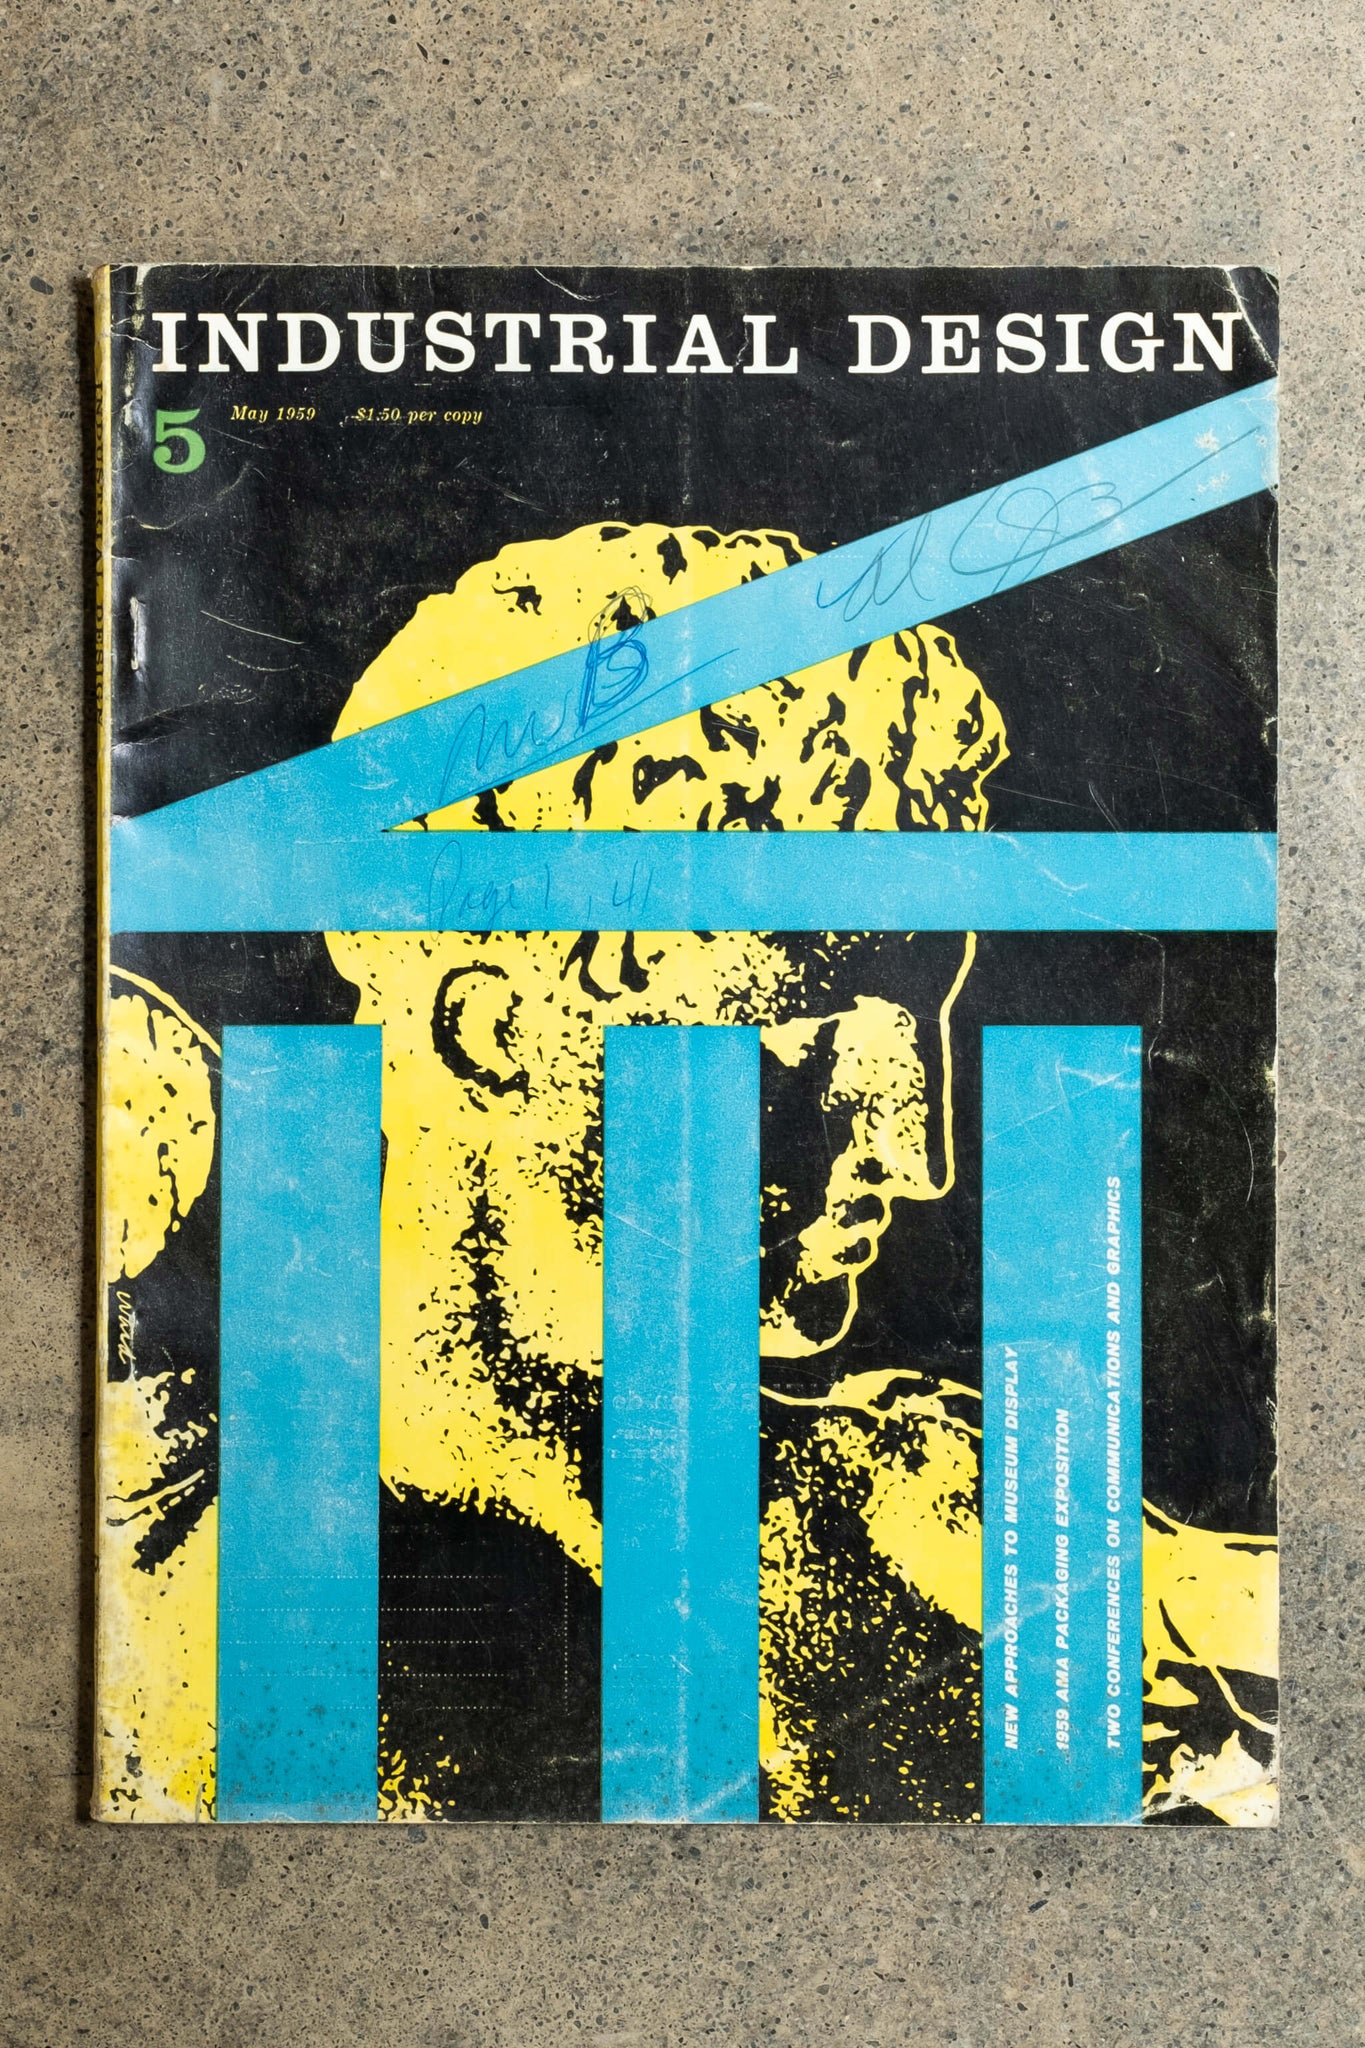 Industrial Design Vintage Magazine, May 1959